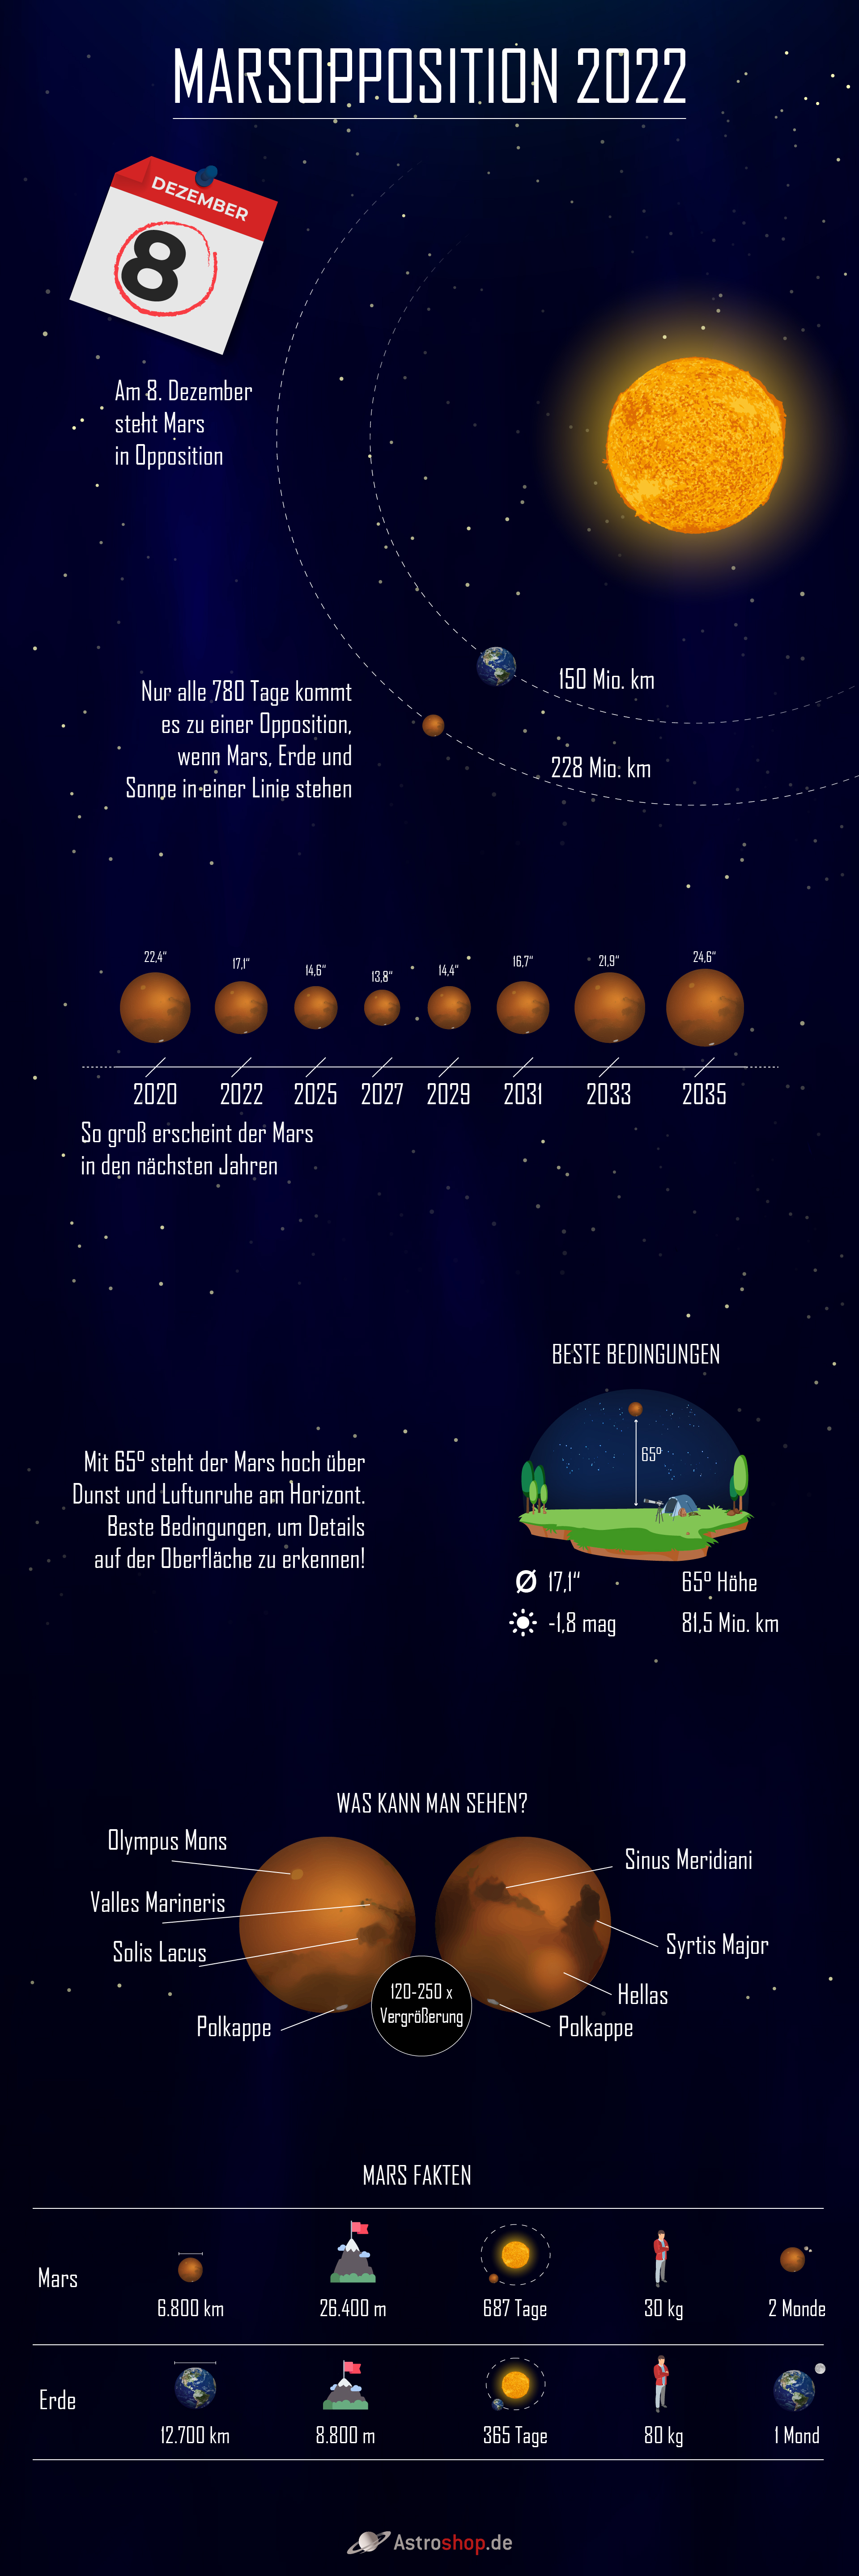 Marsopposition 2022 DE Infographic